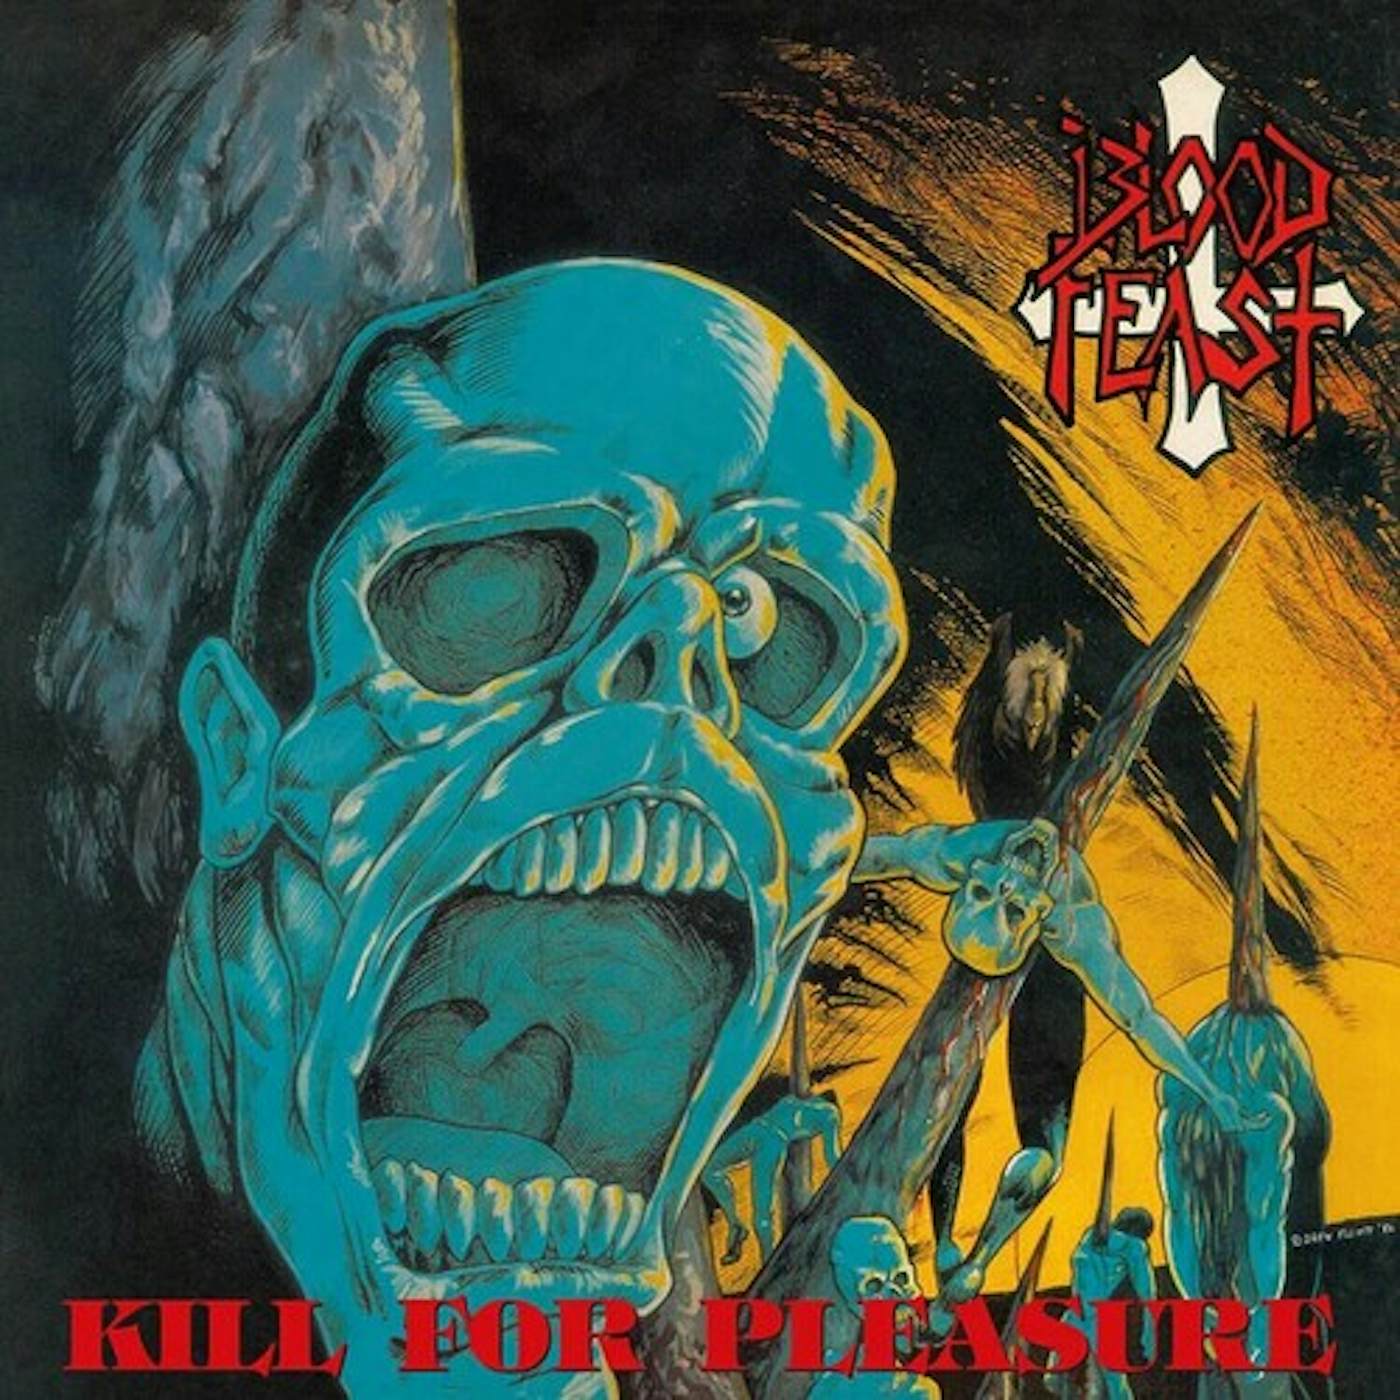 Blood Feast Kill For Pleasure Vinyl Record